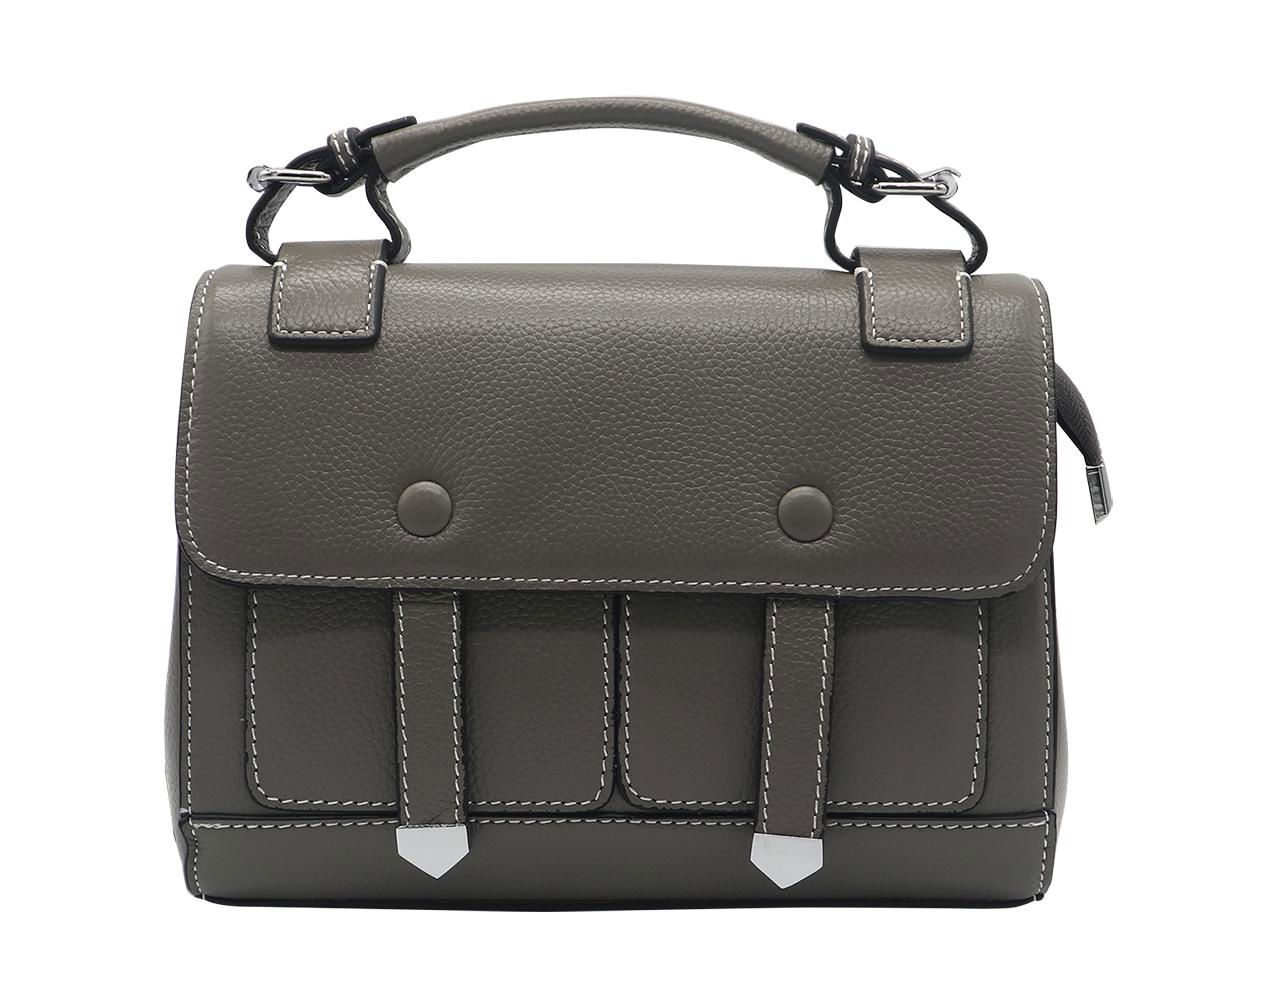 Hot! 2019 newest genuine leather trend women handbag grey colour 